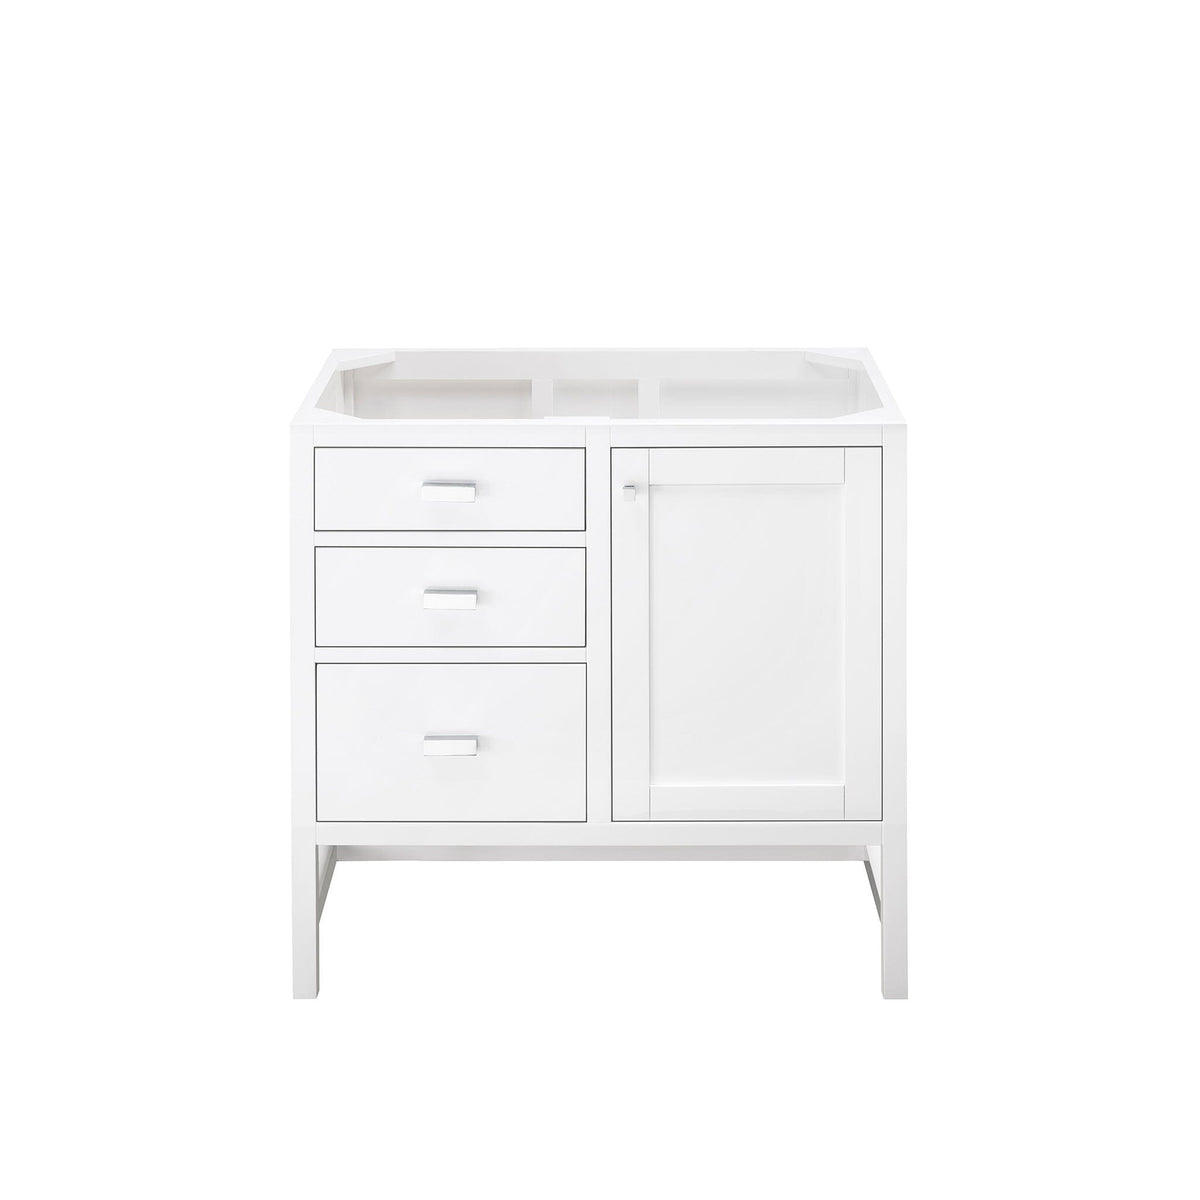 36" Addison Single Vanity Cabinet, Glossy White